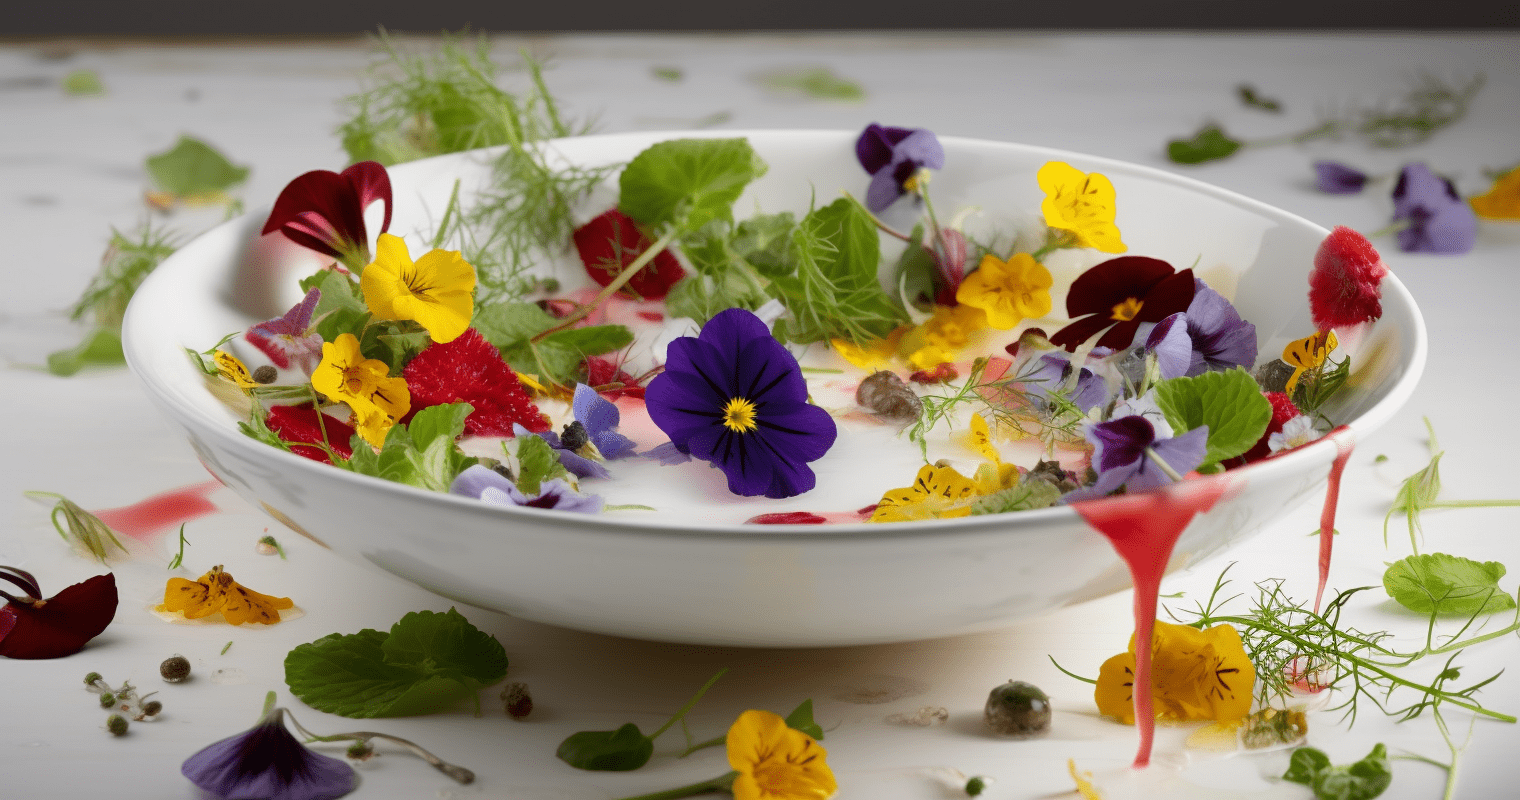 Delightful Garden Adventures: Creating an Edible Flower Salad as a Culinary Masterpiece